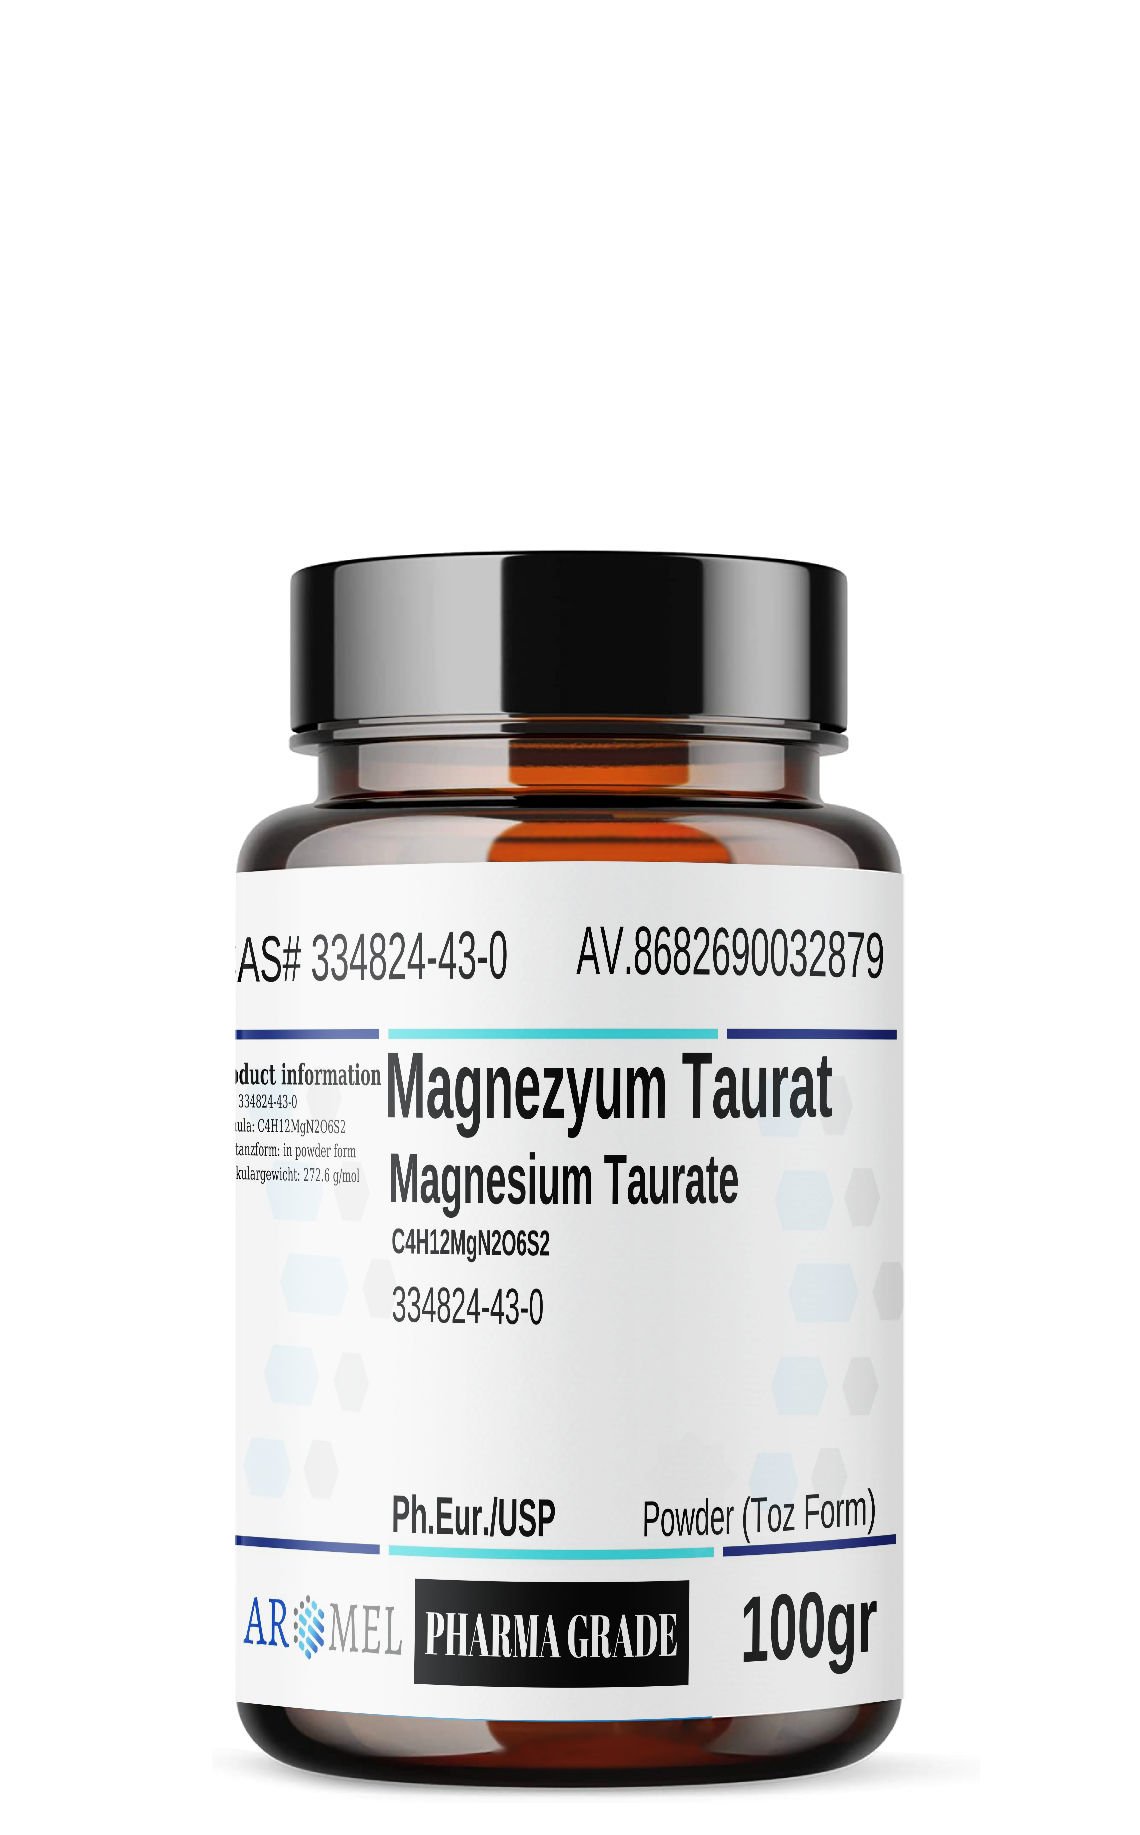 Aromel Magnezyum Taurinat | 100 gr | Magnesium Taurate